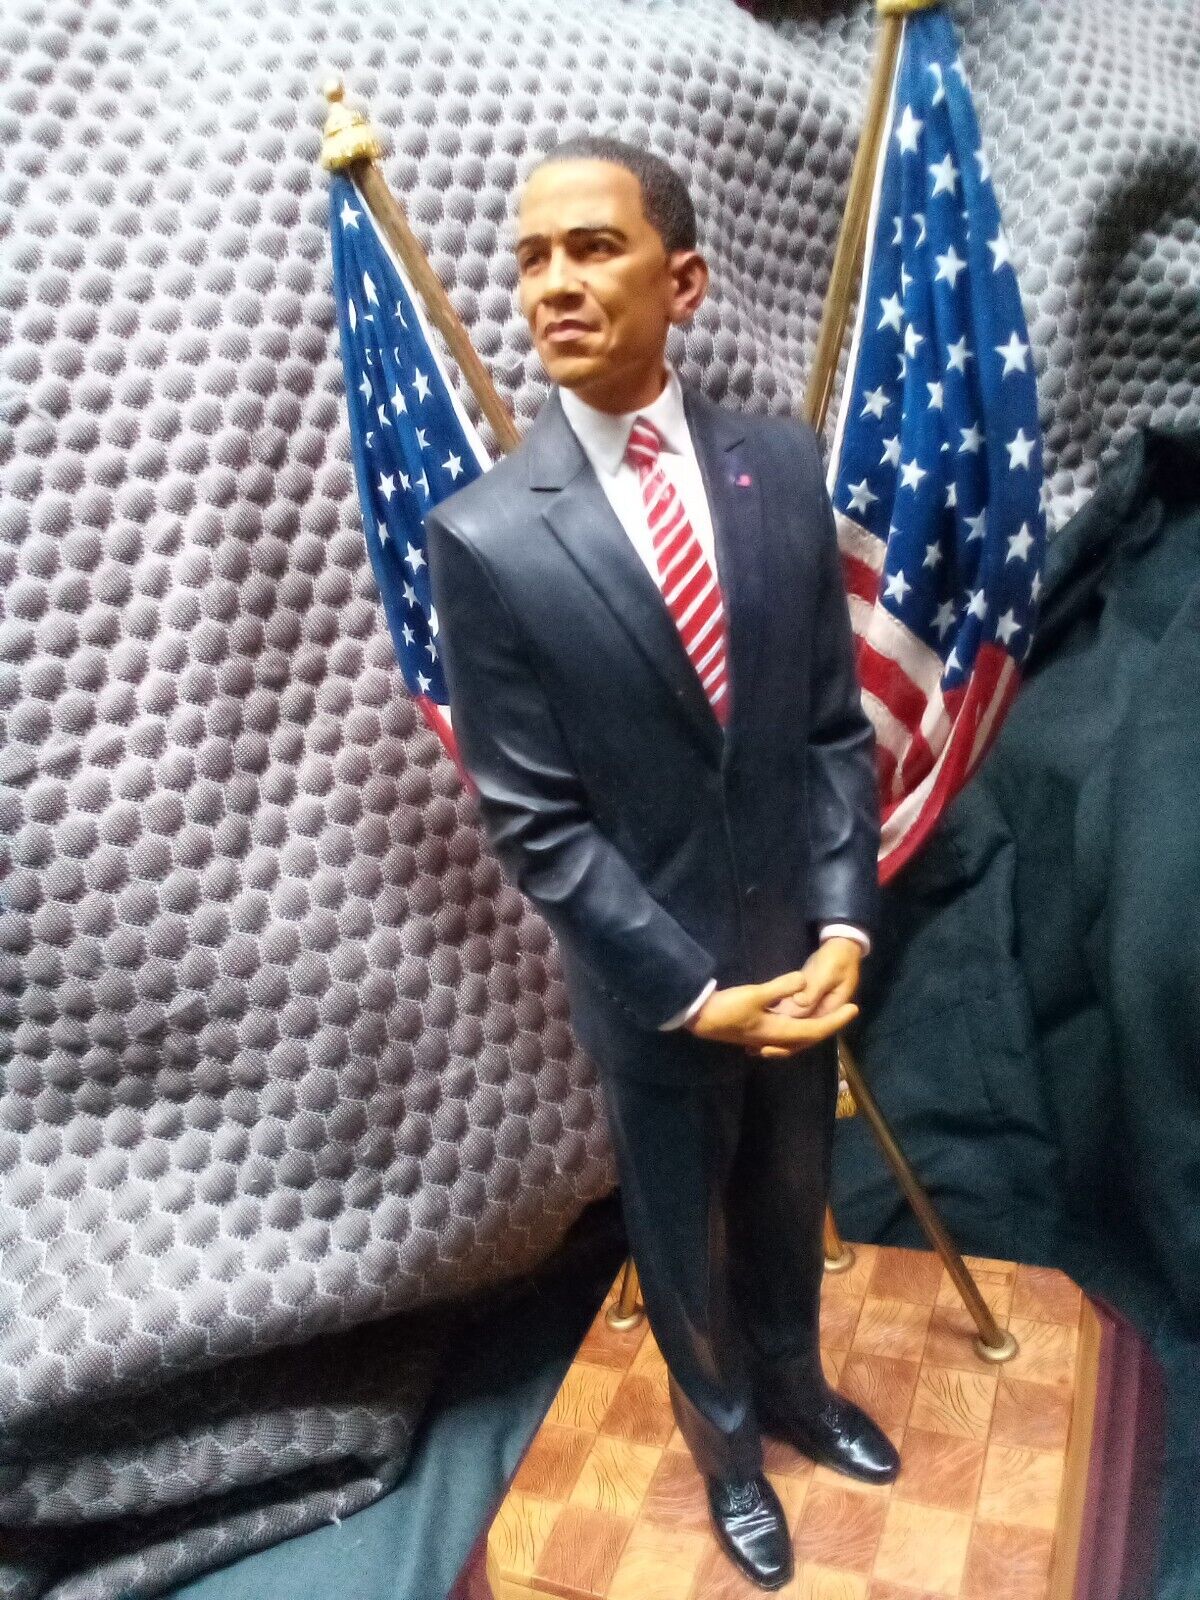 Collectible president Obama figurine 